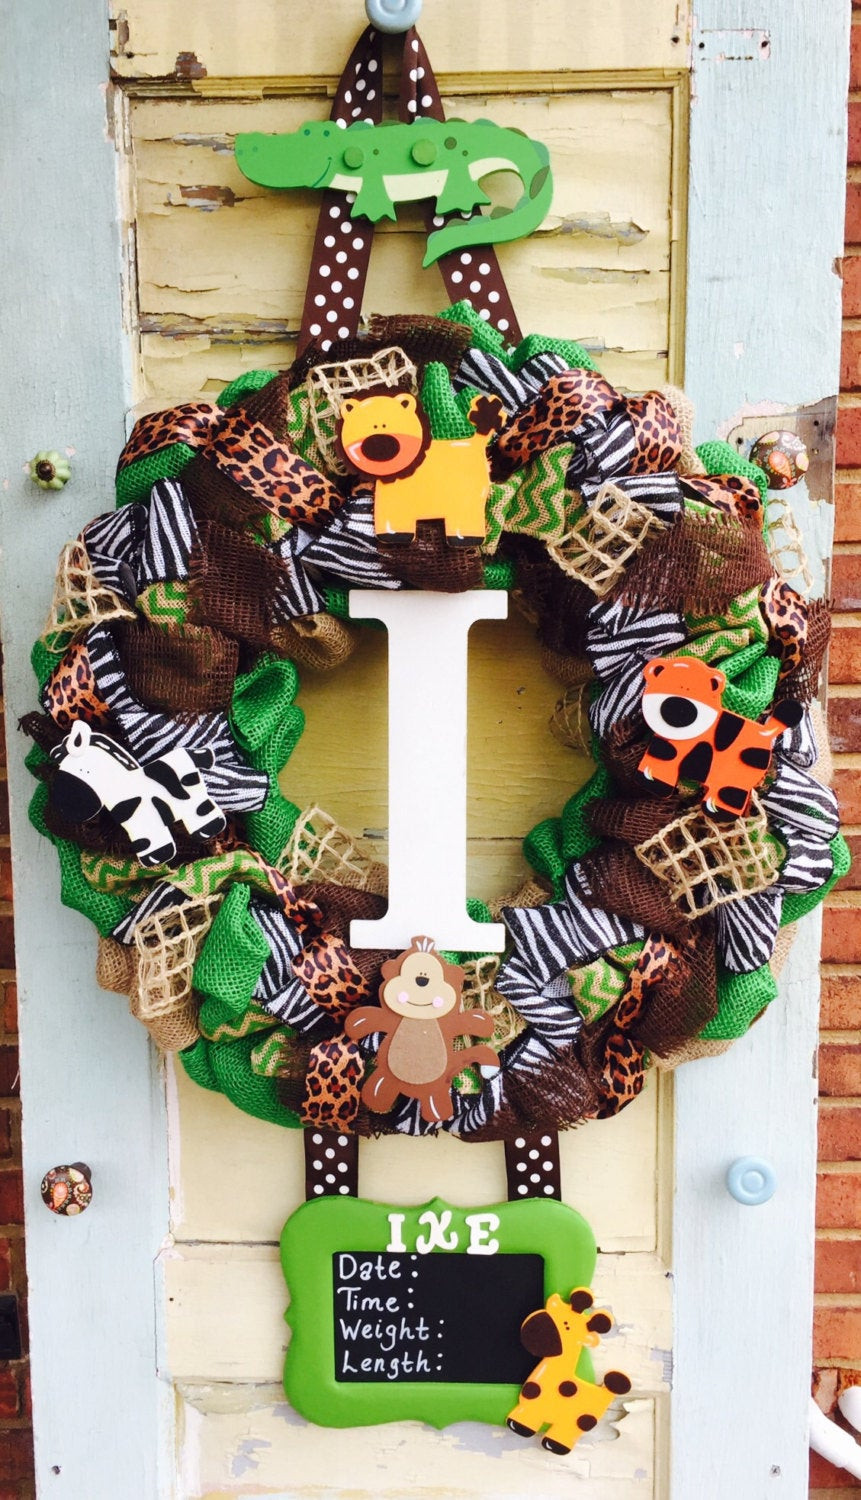 Best ideas about DIY Baby Wreath Hospital Door
. Save or Pin Safari Baby Hospital Door Wreath by East2Nest on Etsy Now.